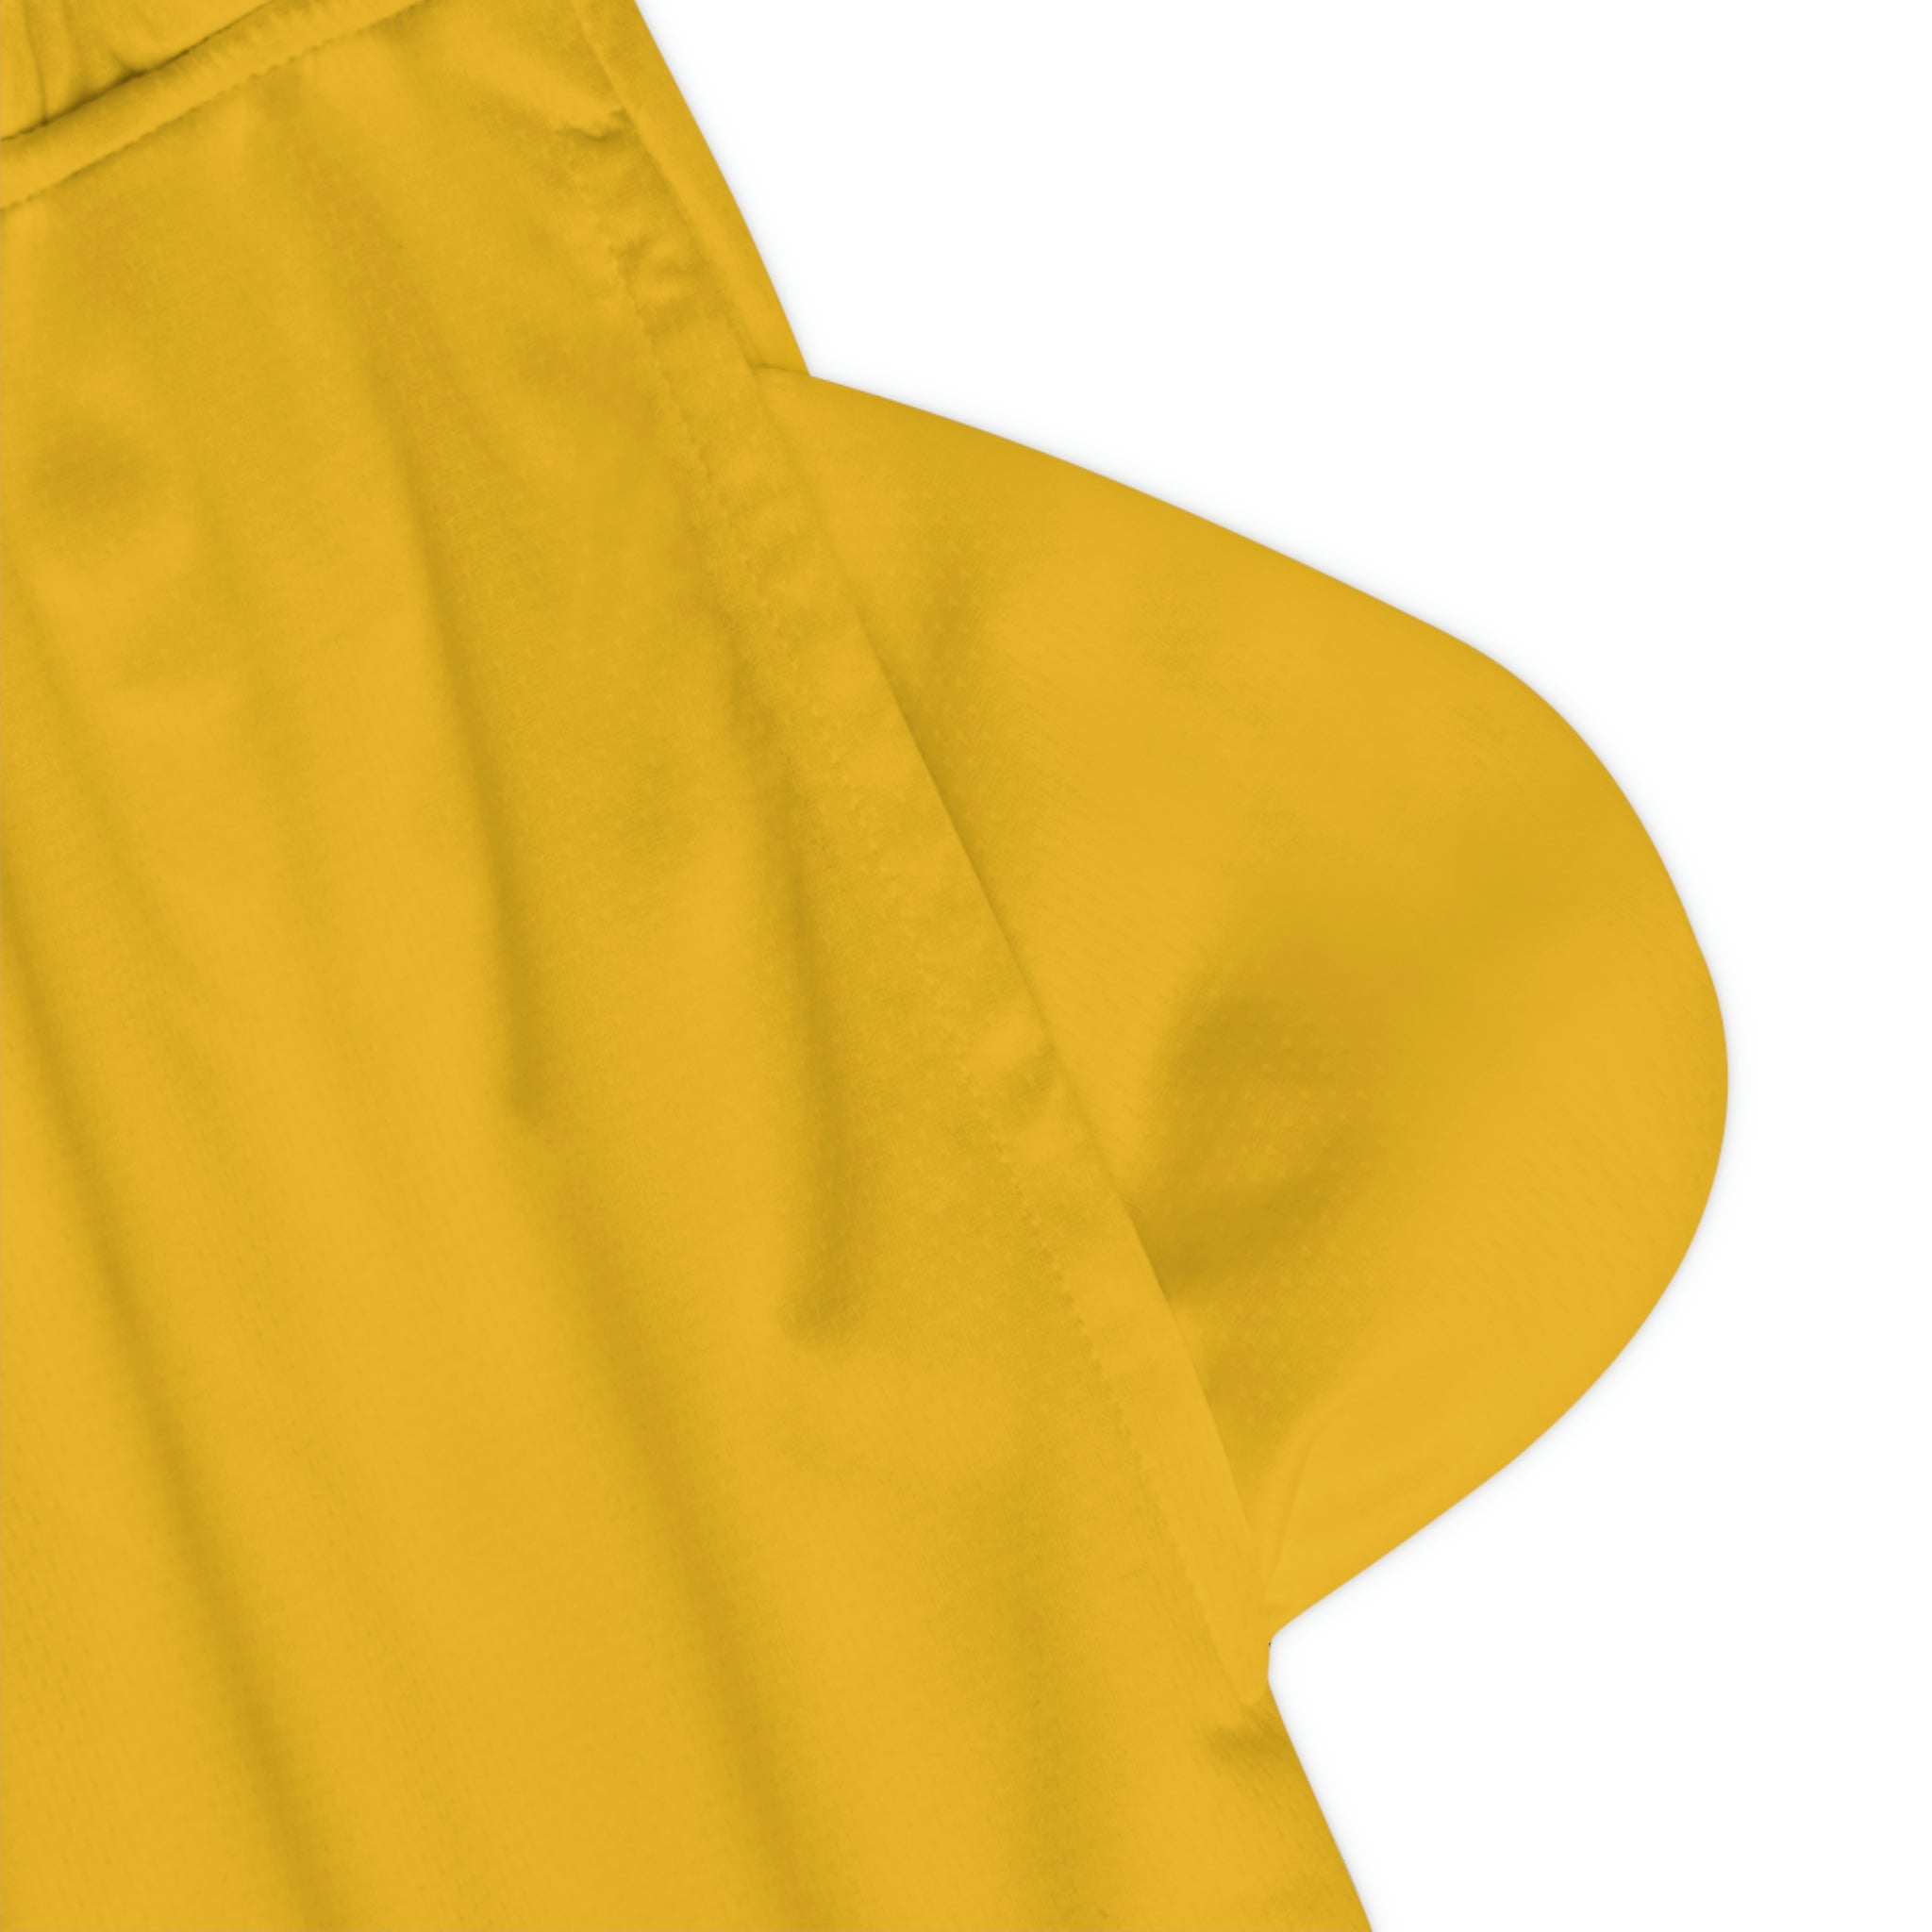 Combinedminds Basketball Shorts Yellow/Black Logo